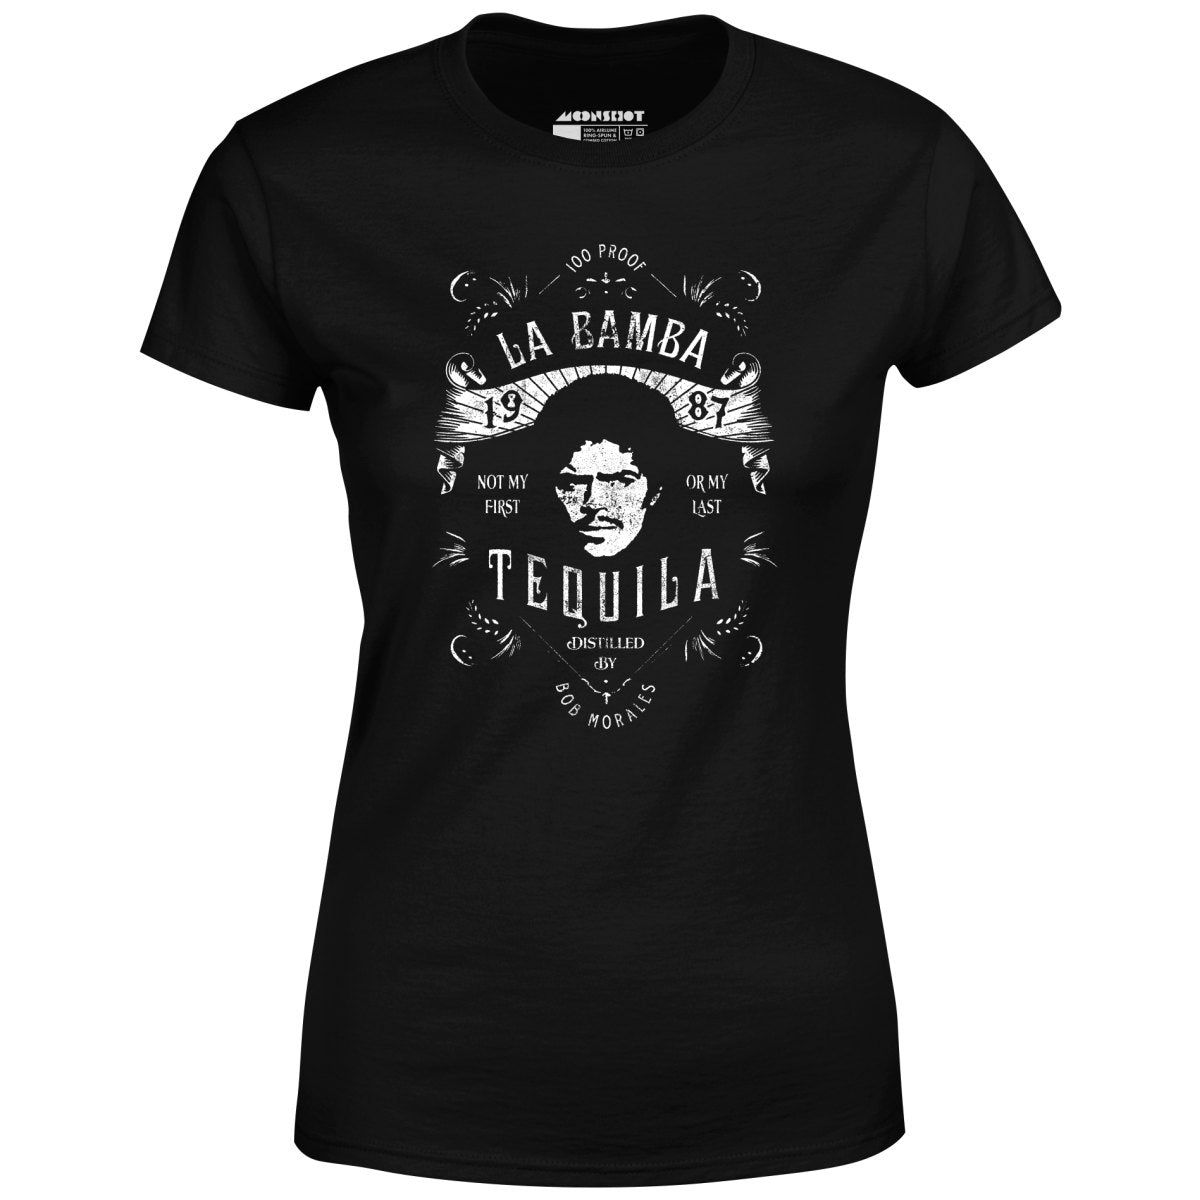 Bob Morales Tequila - Women's T-Shirt